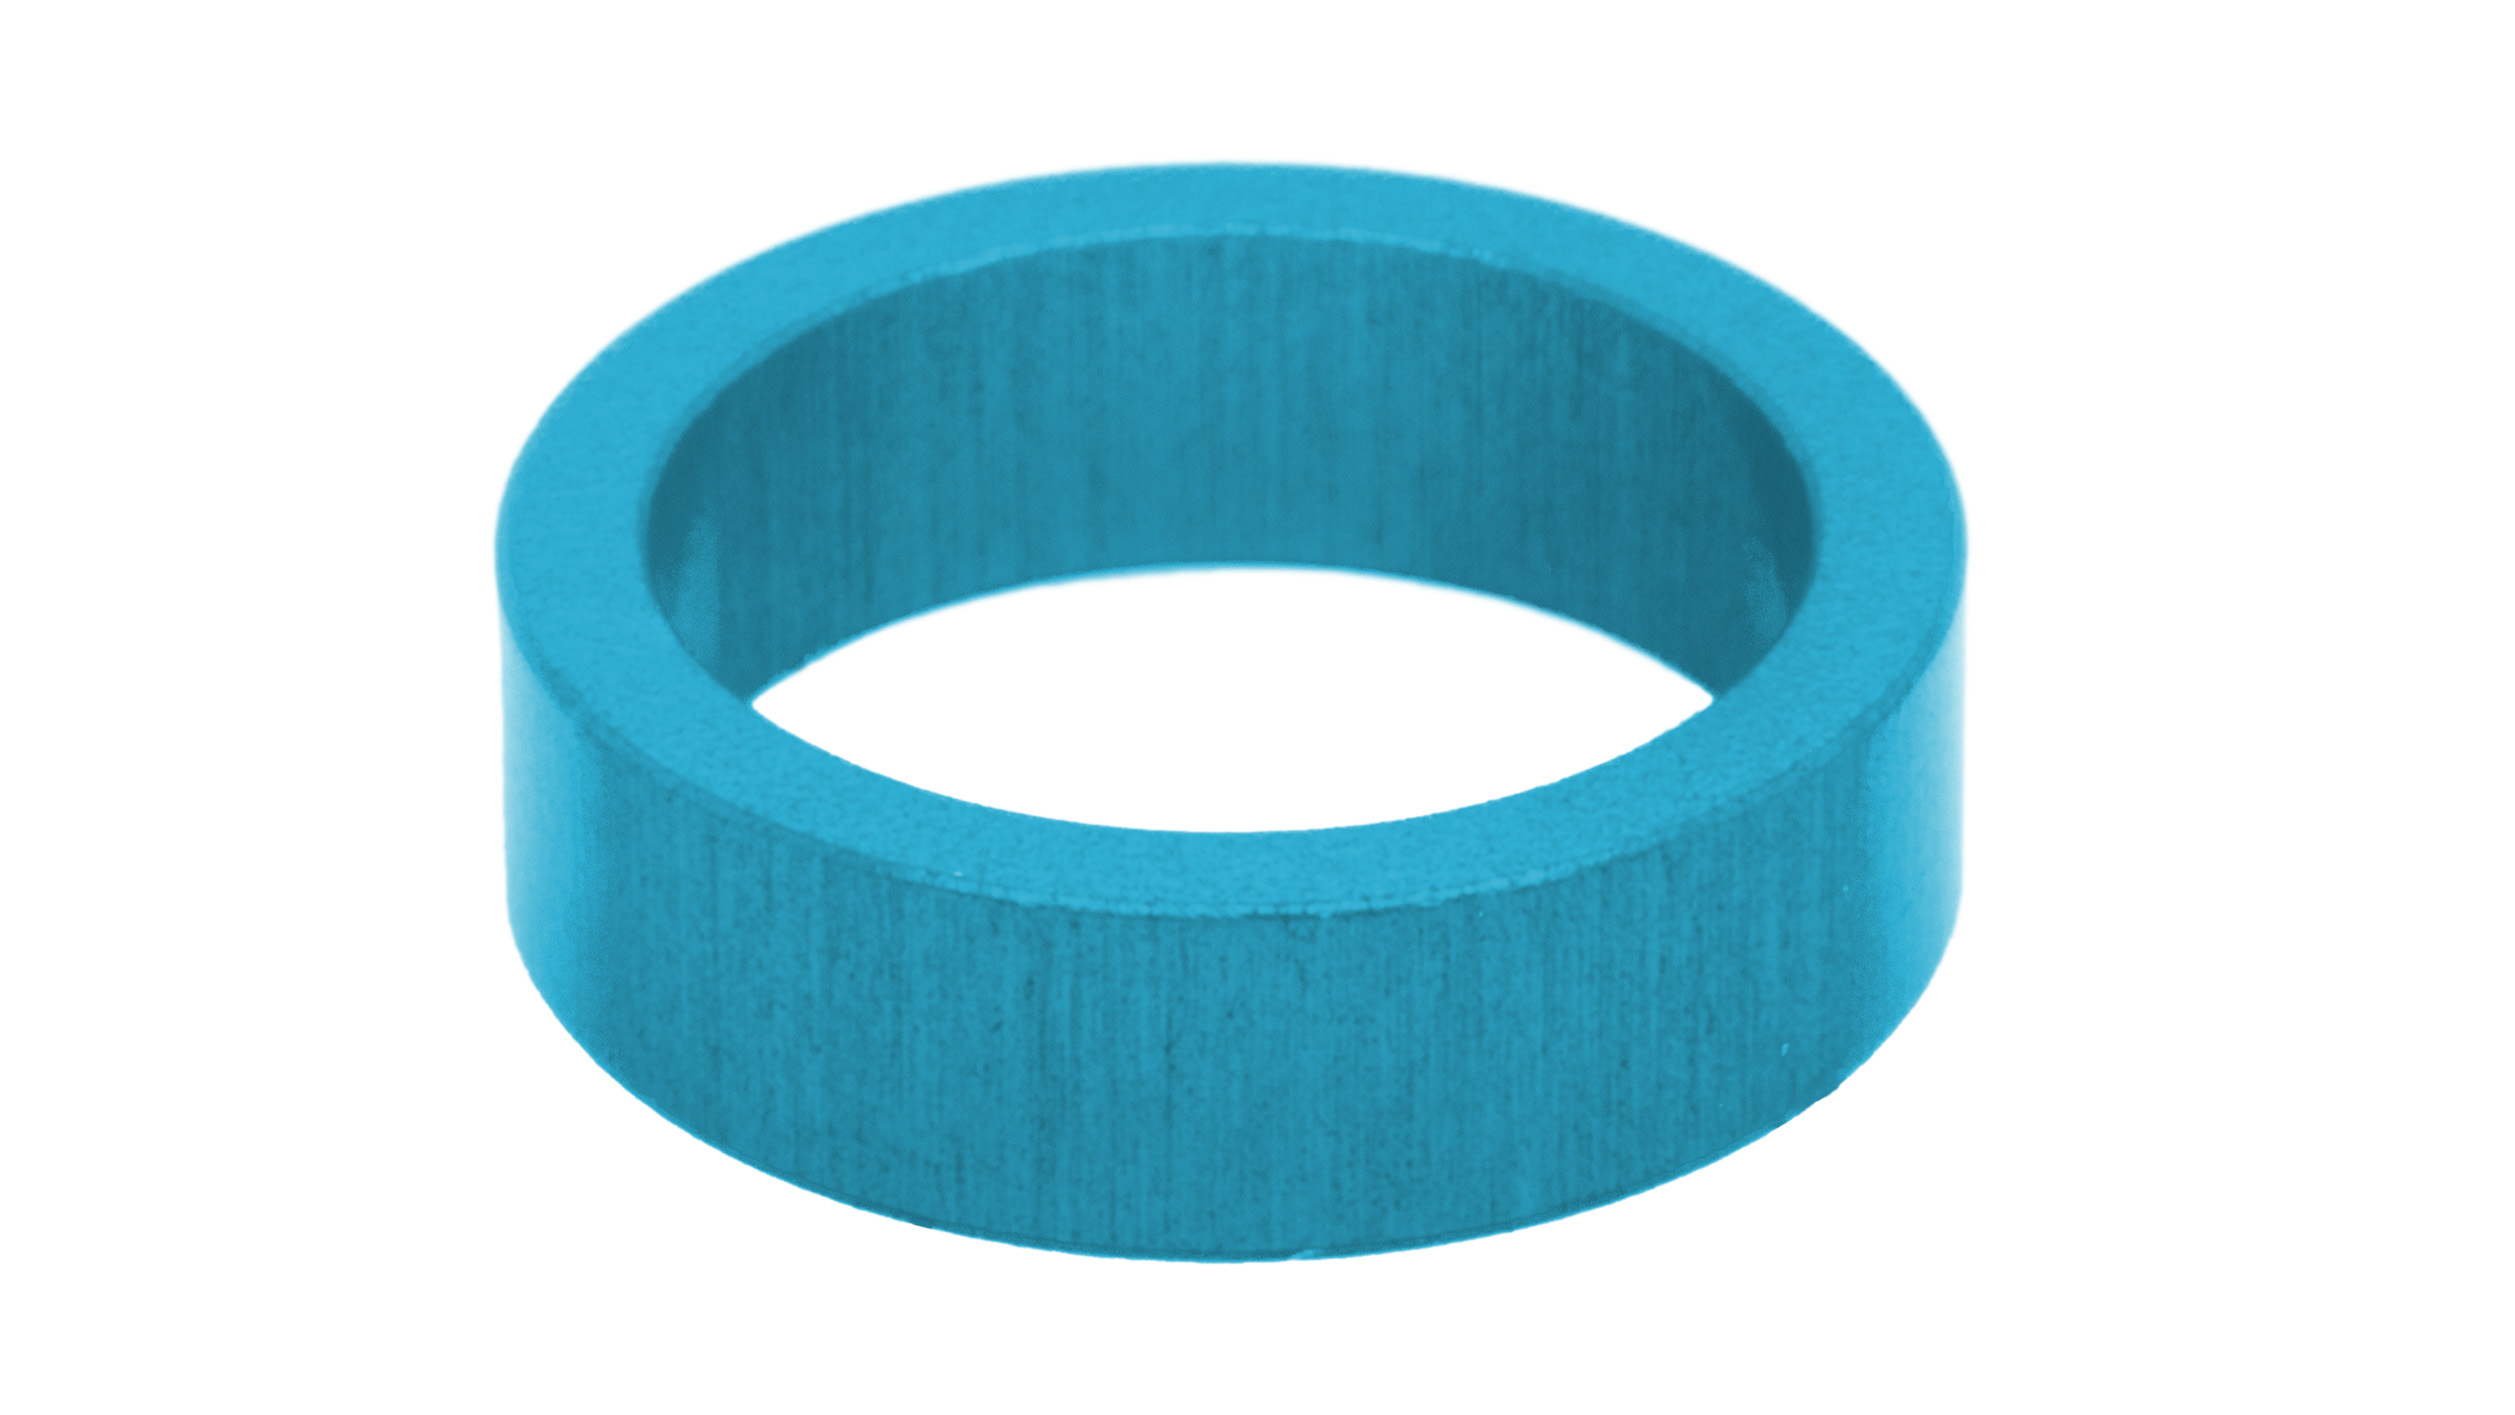 Identifikationsring, blau, für Petitpierre TR, Klinge 1,5 mm